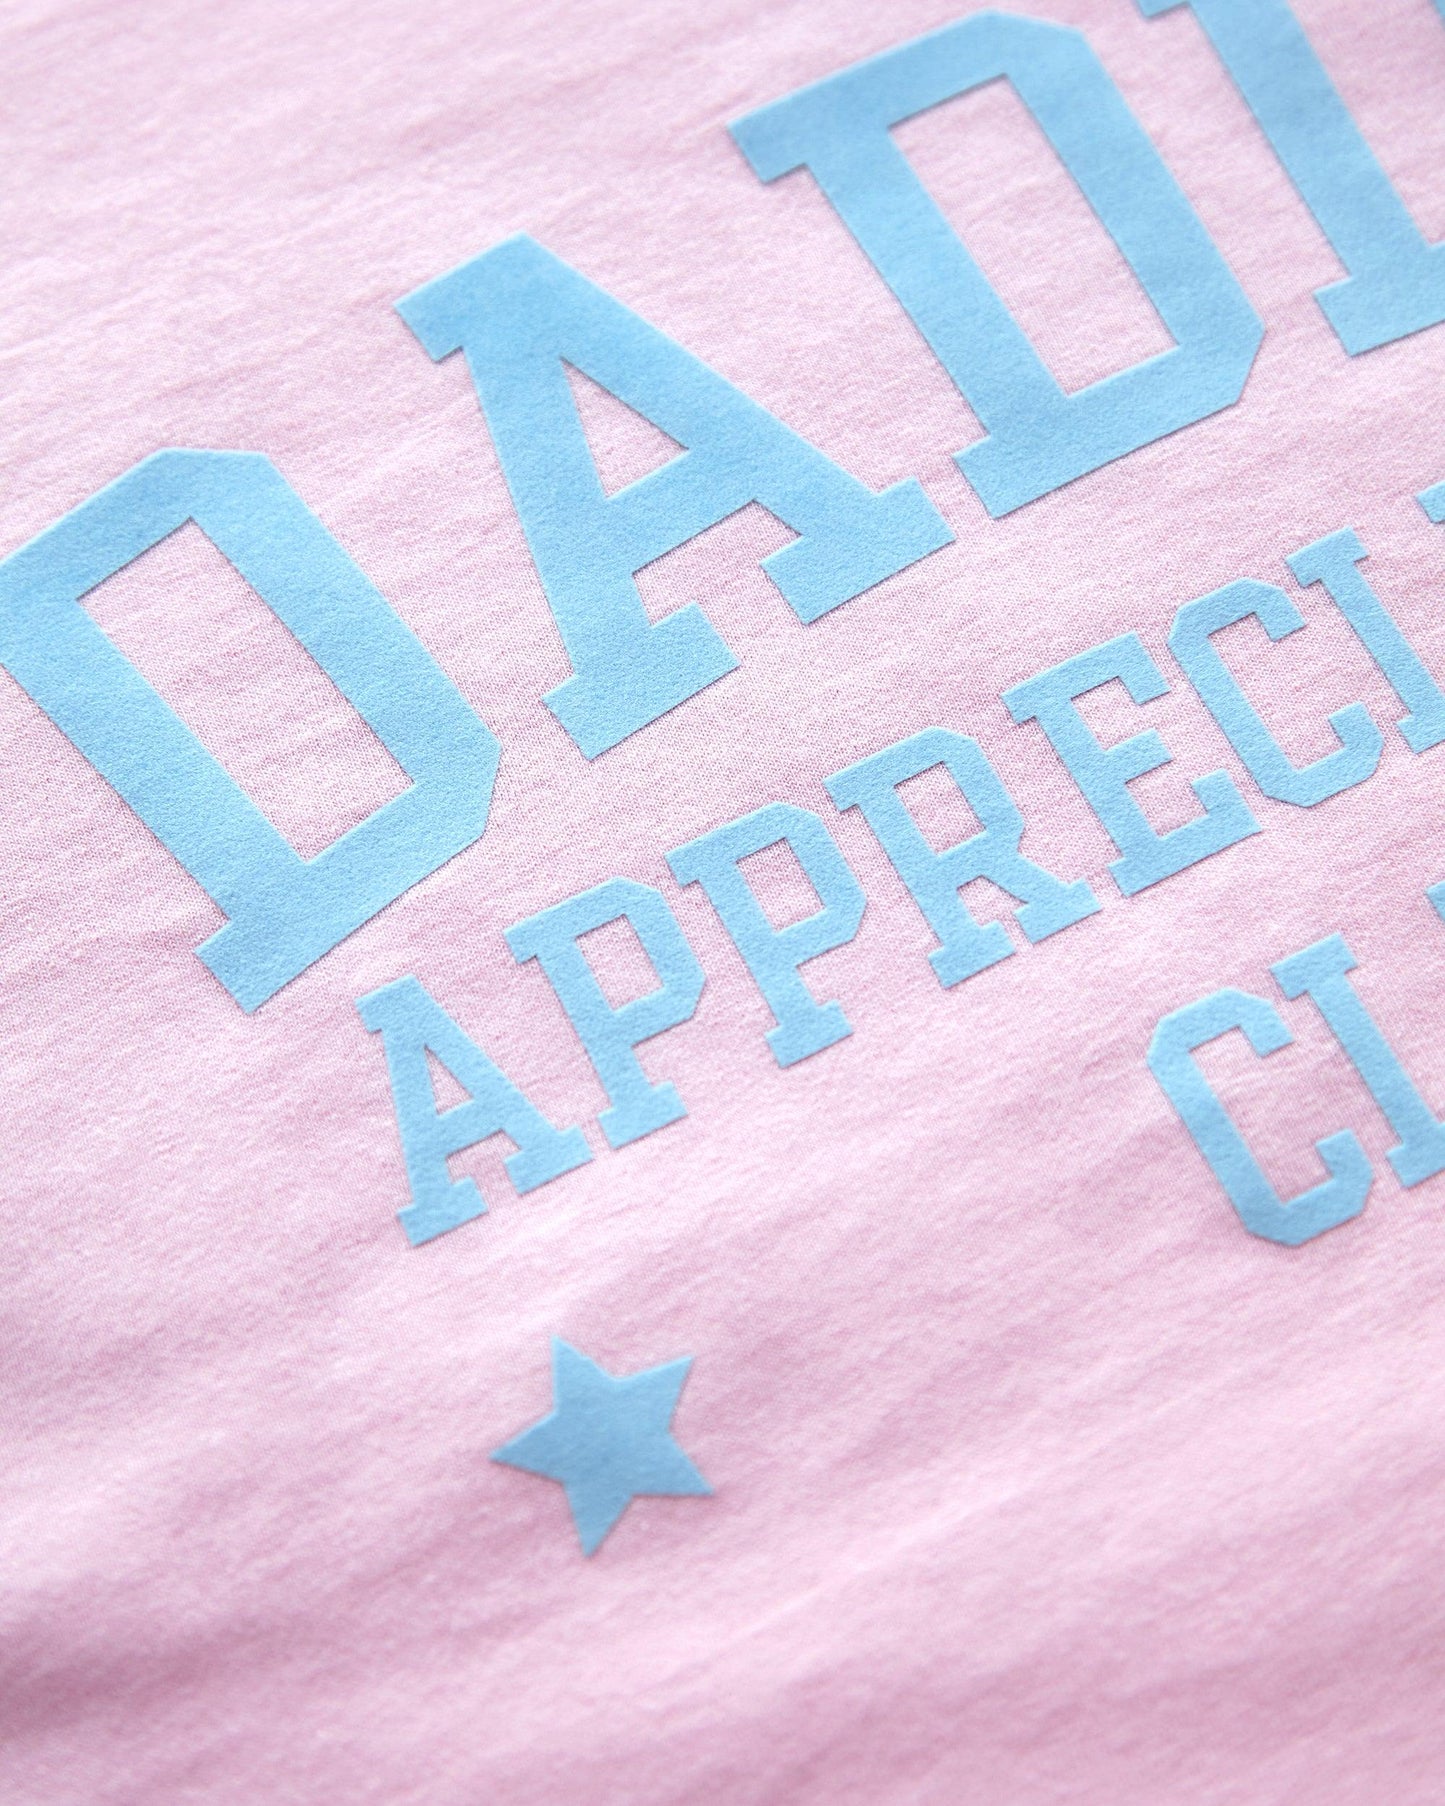 Daddy appreciation club, light blue flock on pink - mens crop top.